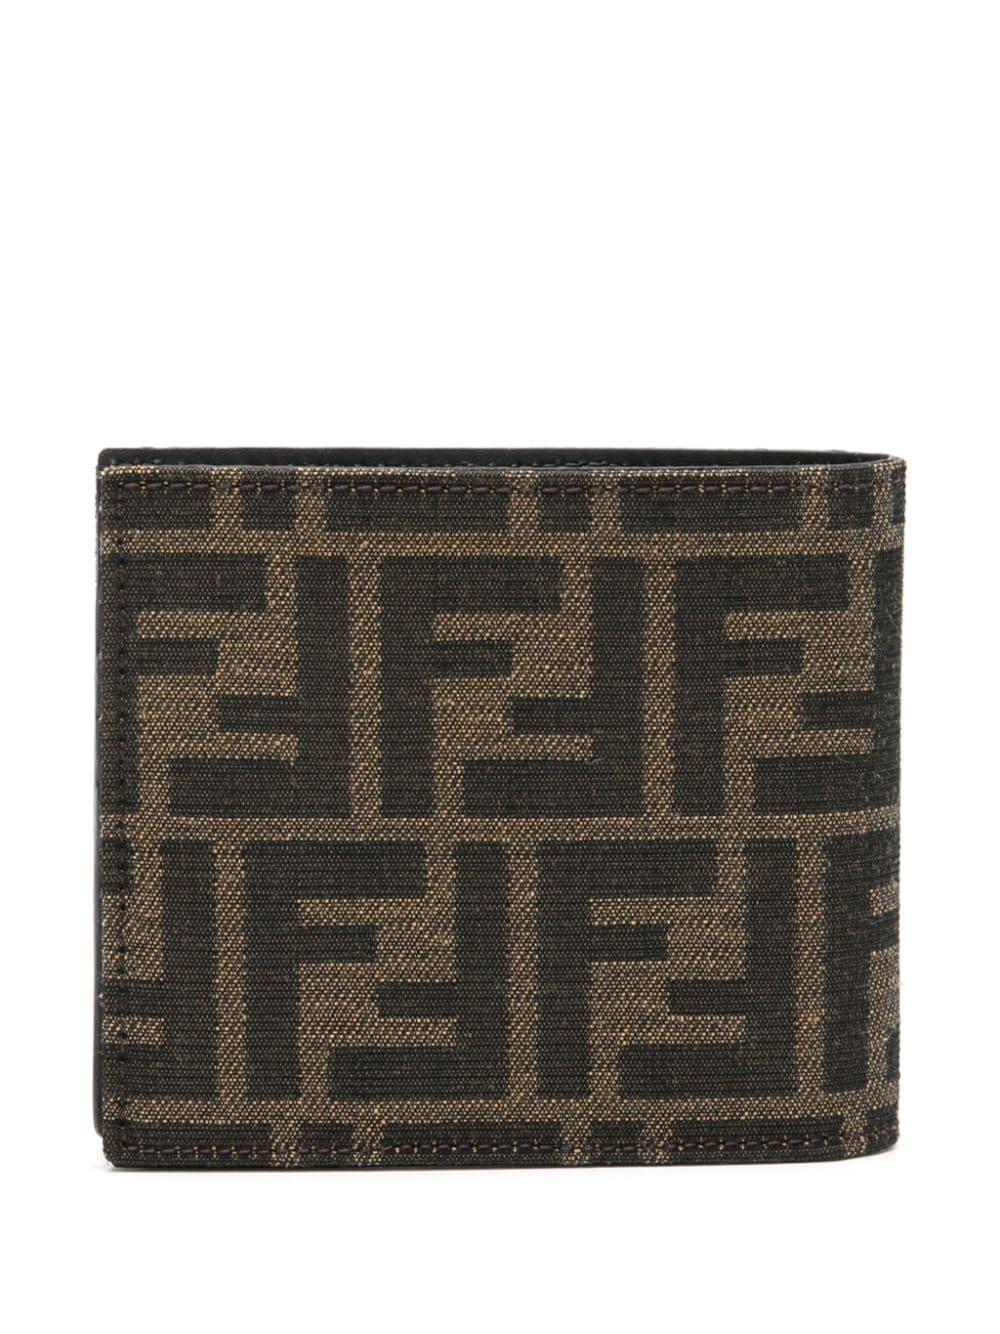 FENDI FF-jacquard leather wallet - Brown